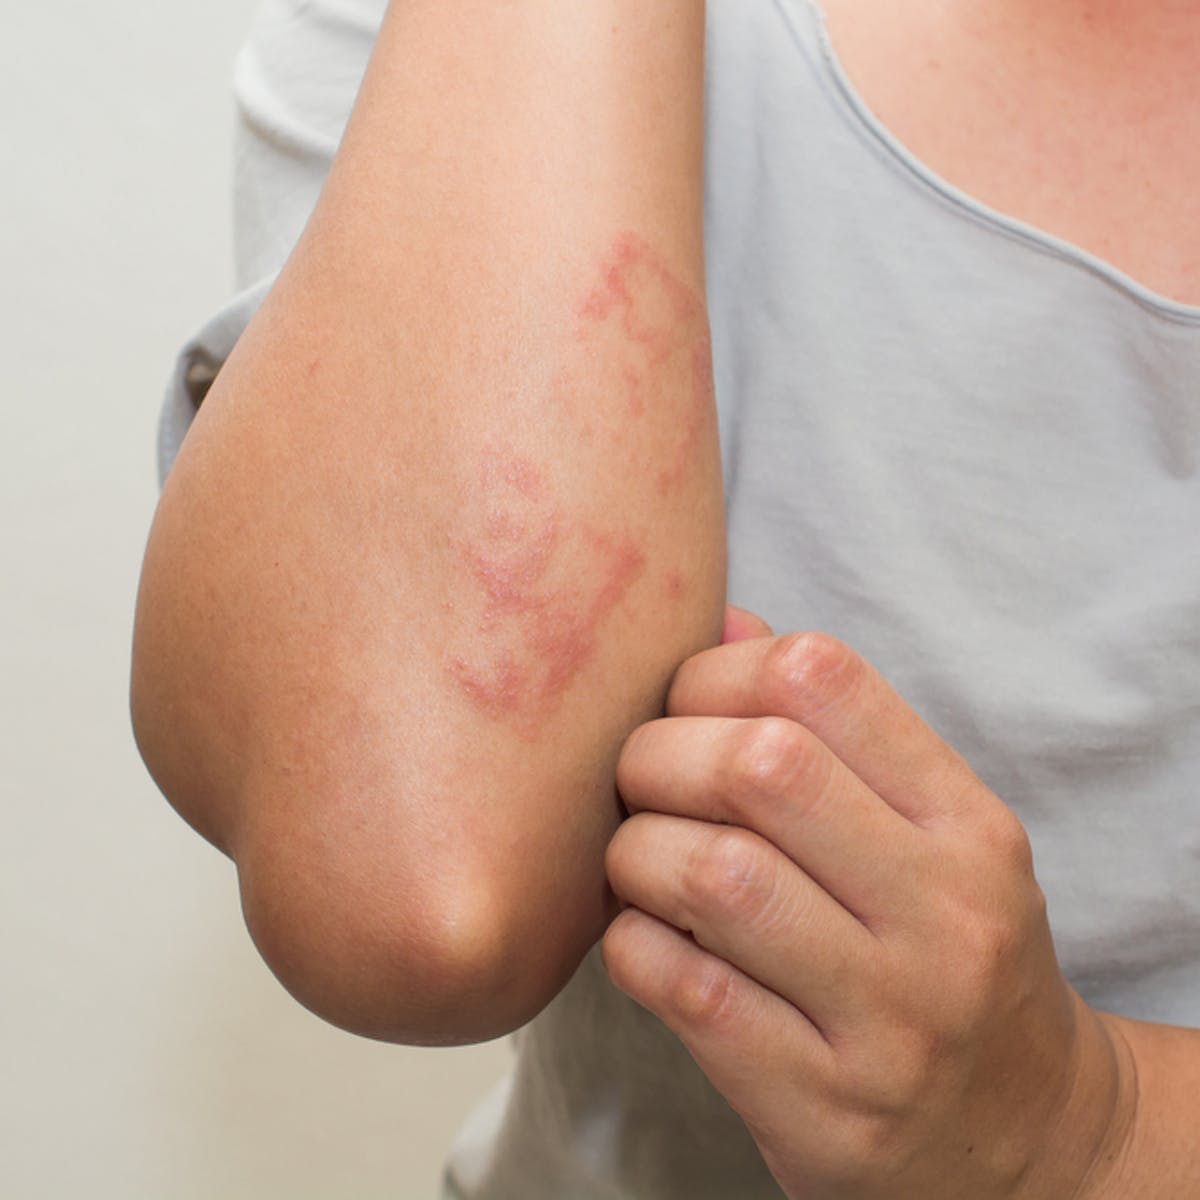 NEW in COVID-19: Skin Rashes Linked to Virus - Apex ...